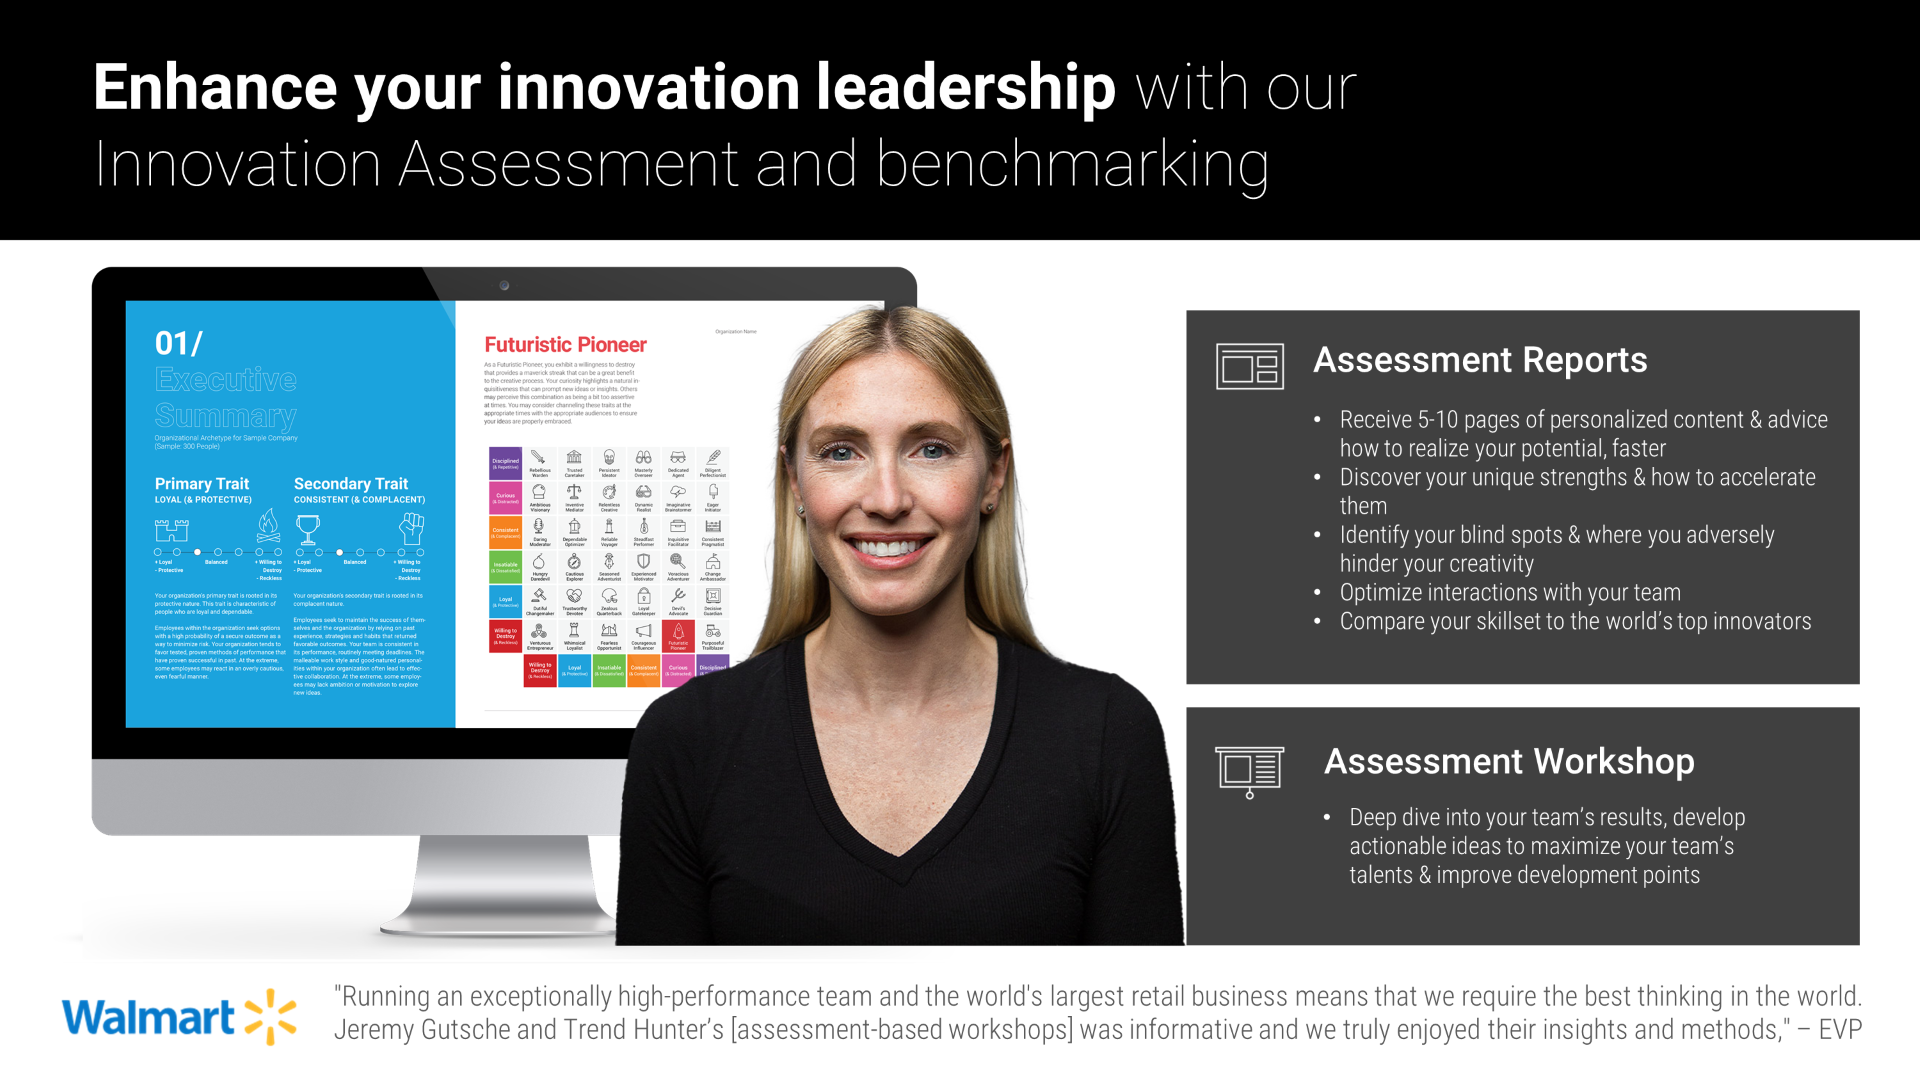 Image Slide: Innovation Assessment Benchmarking